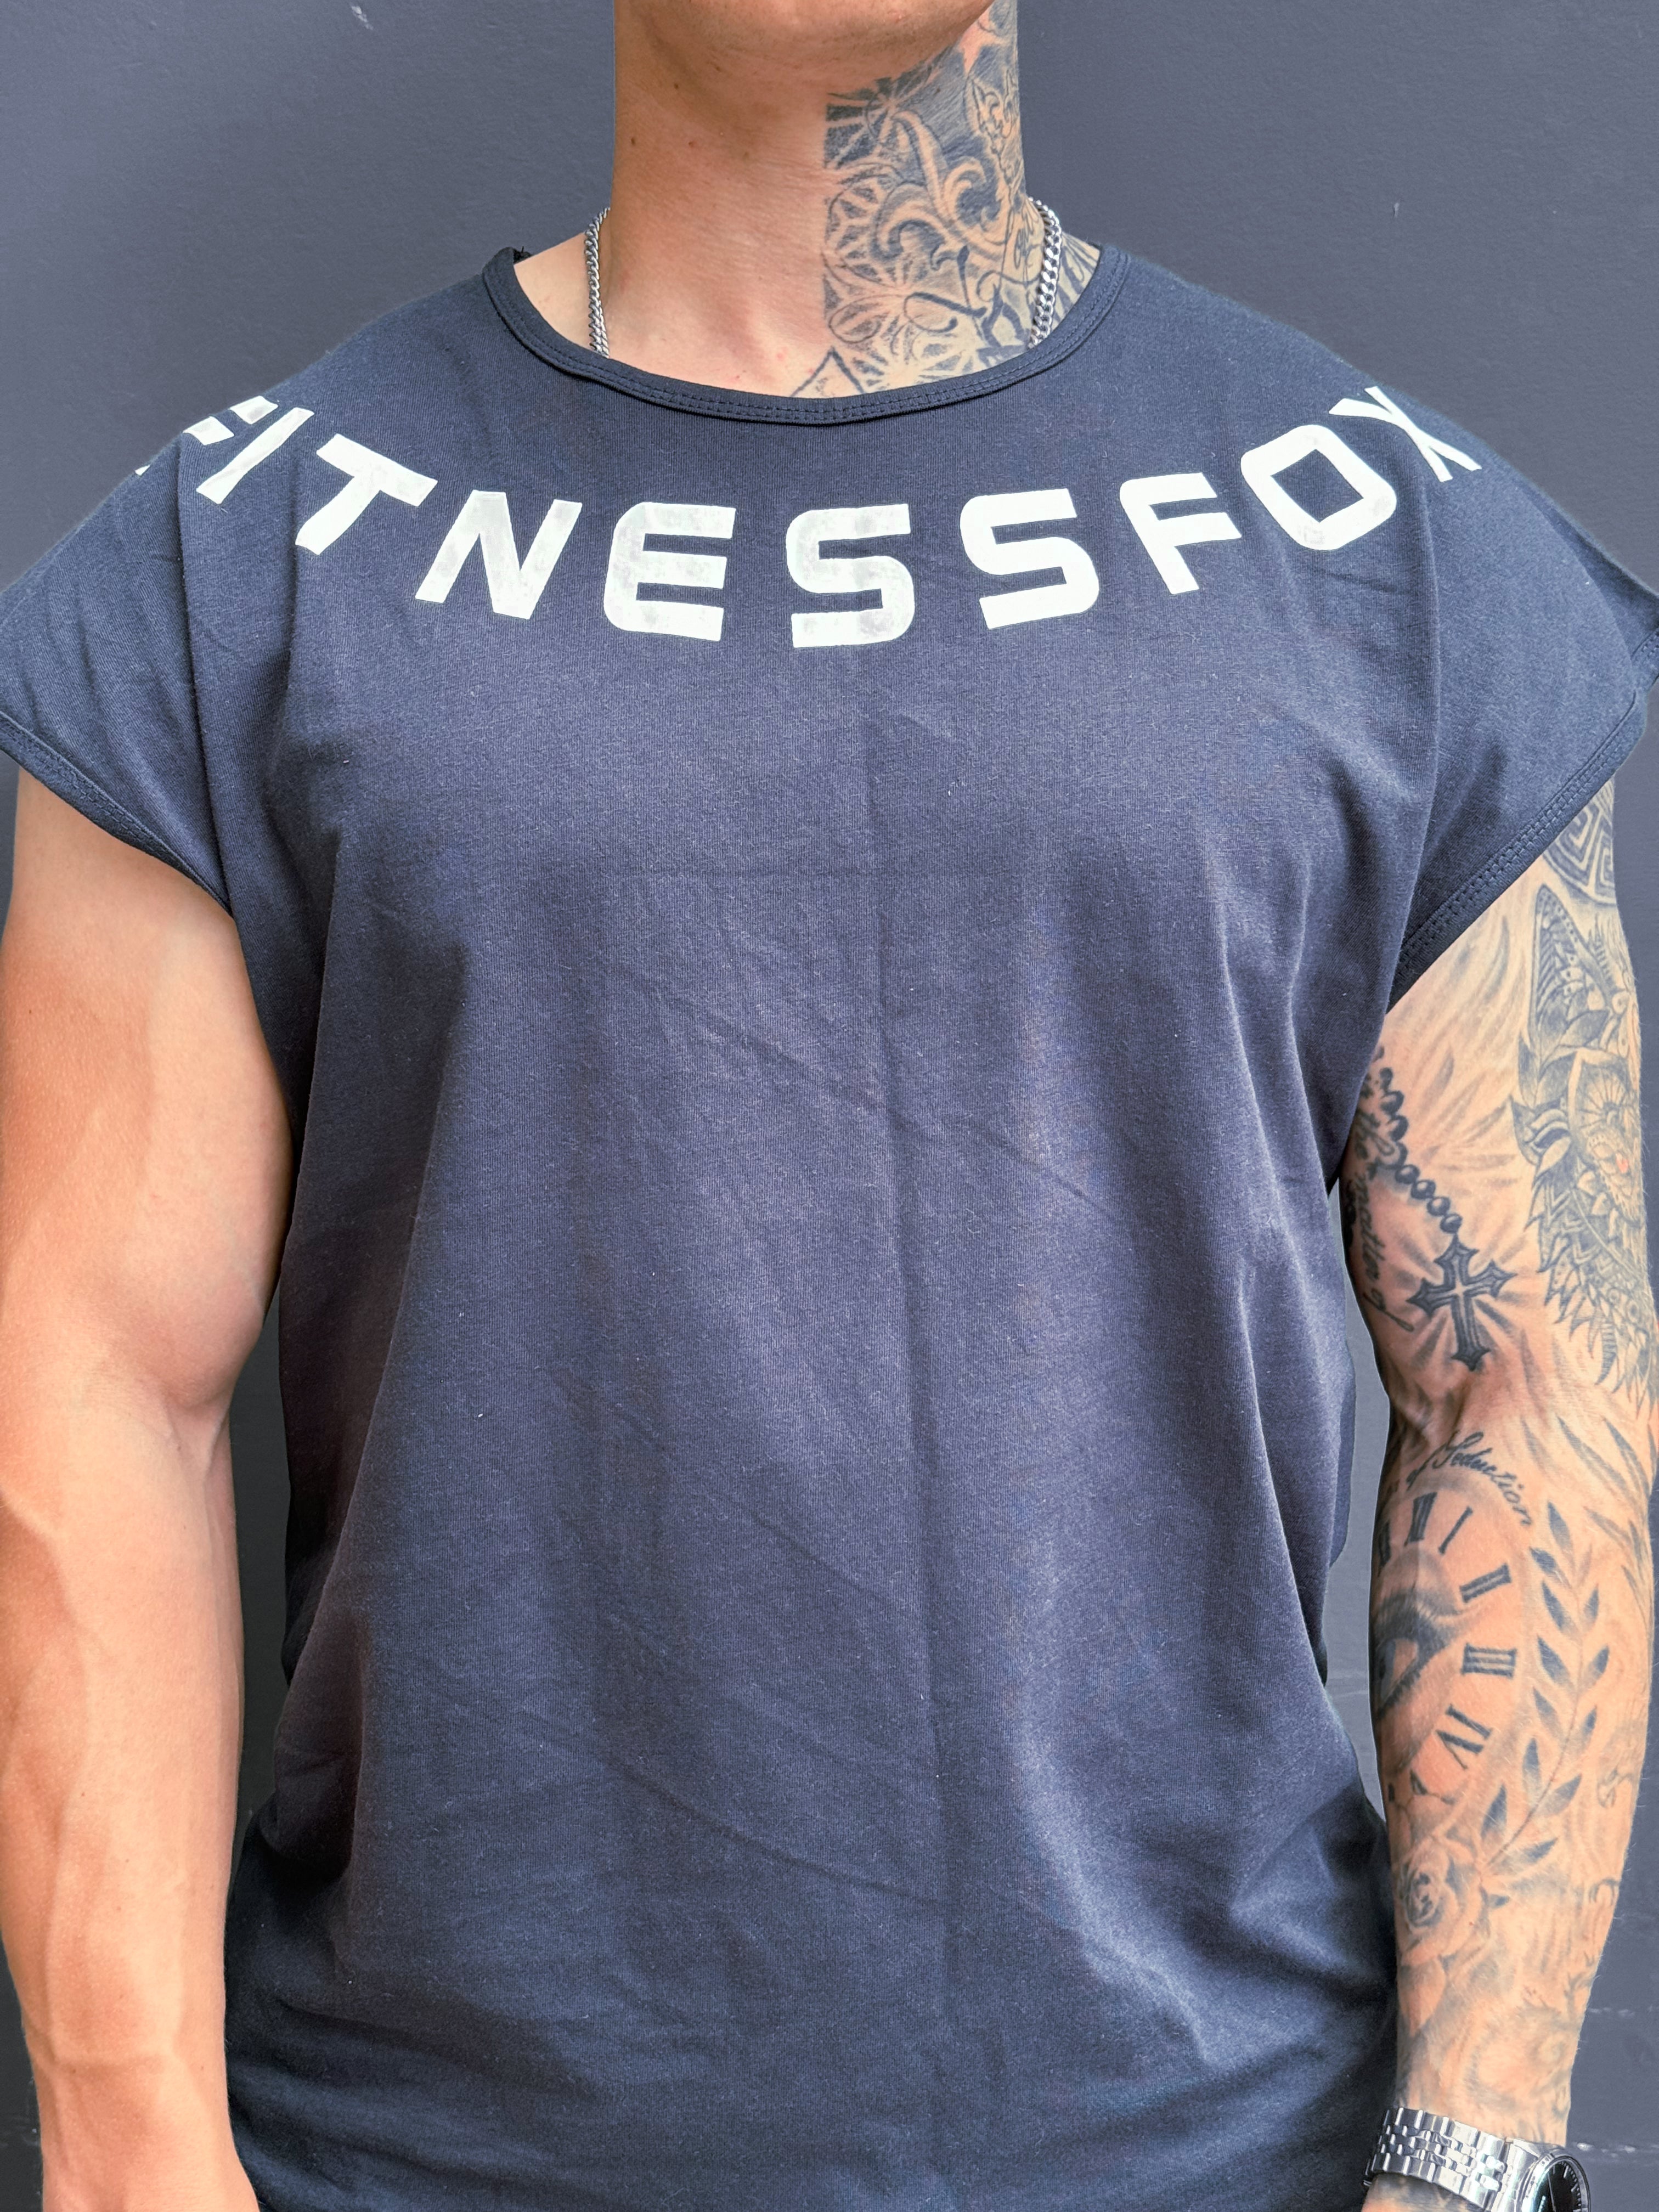 Fitnessfox Oversize Muscle Singlet (Navy Blue-White)